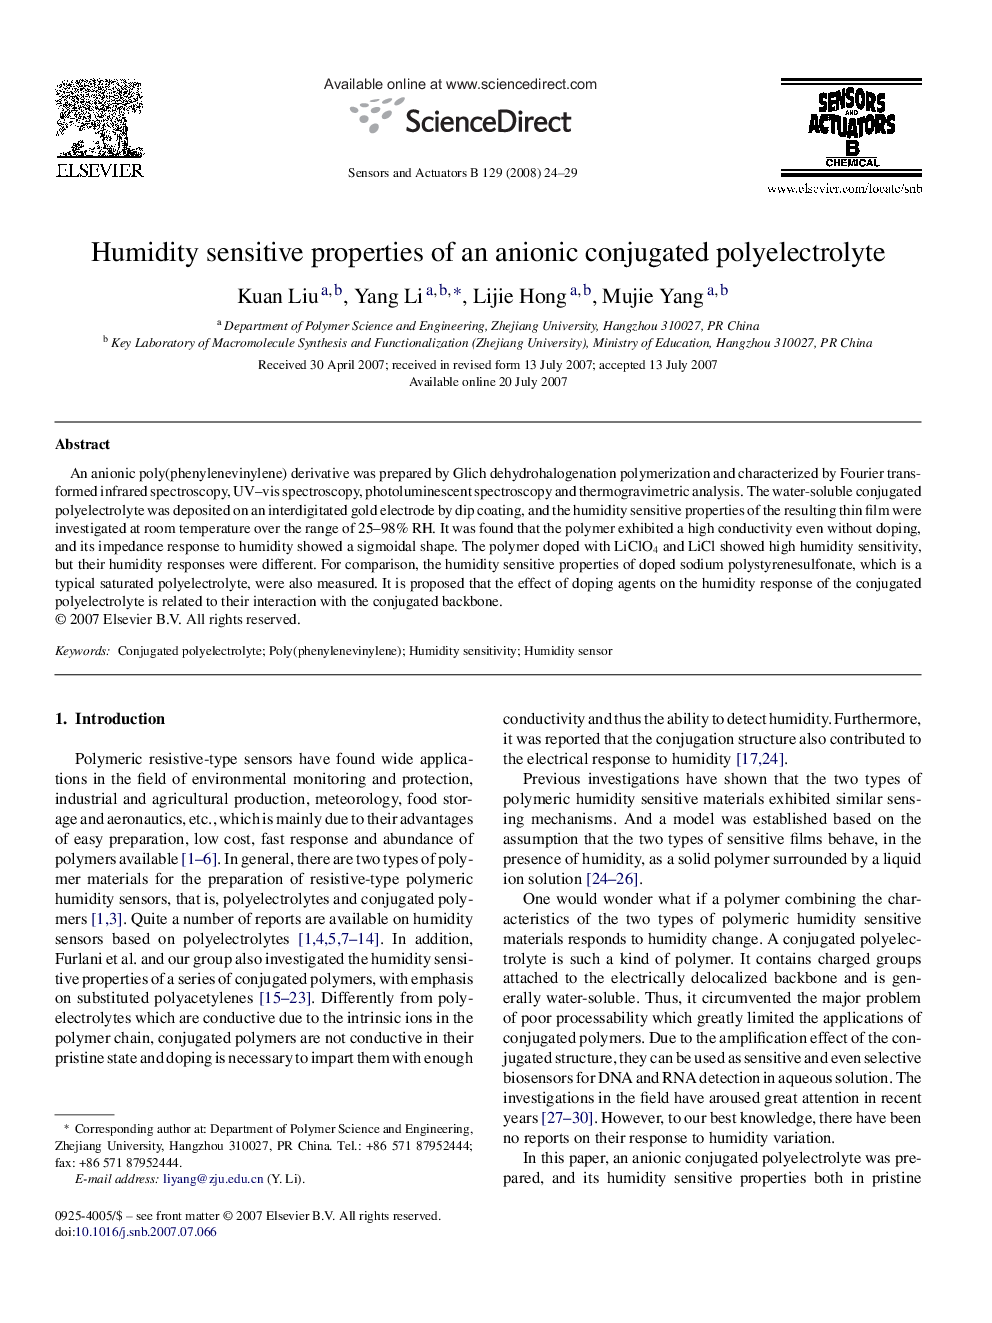 Humidity sensitive properties of an anionic conjugated polyelectrolyte